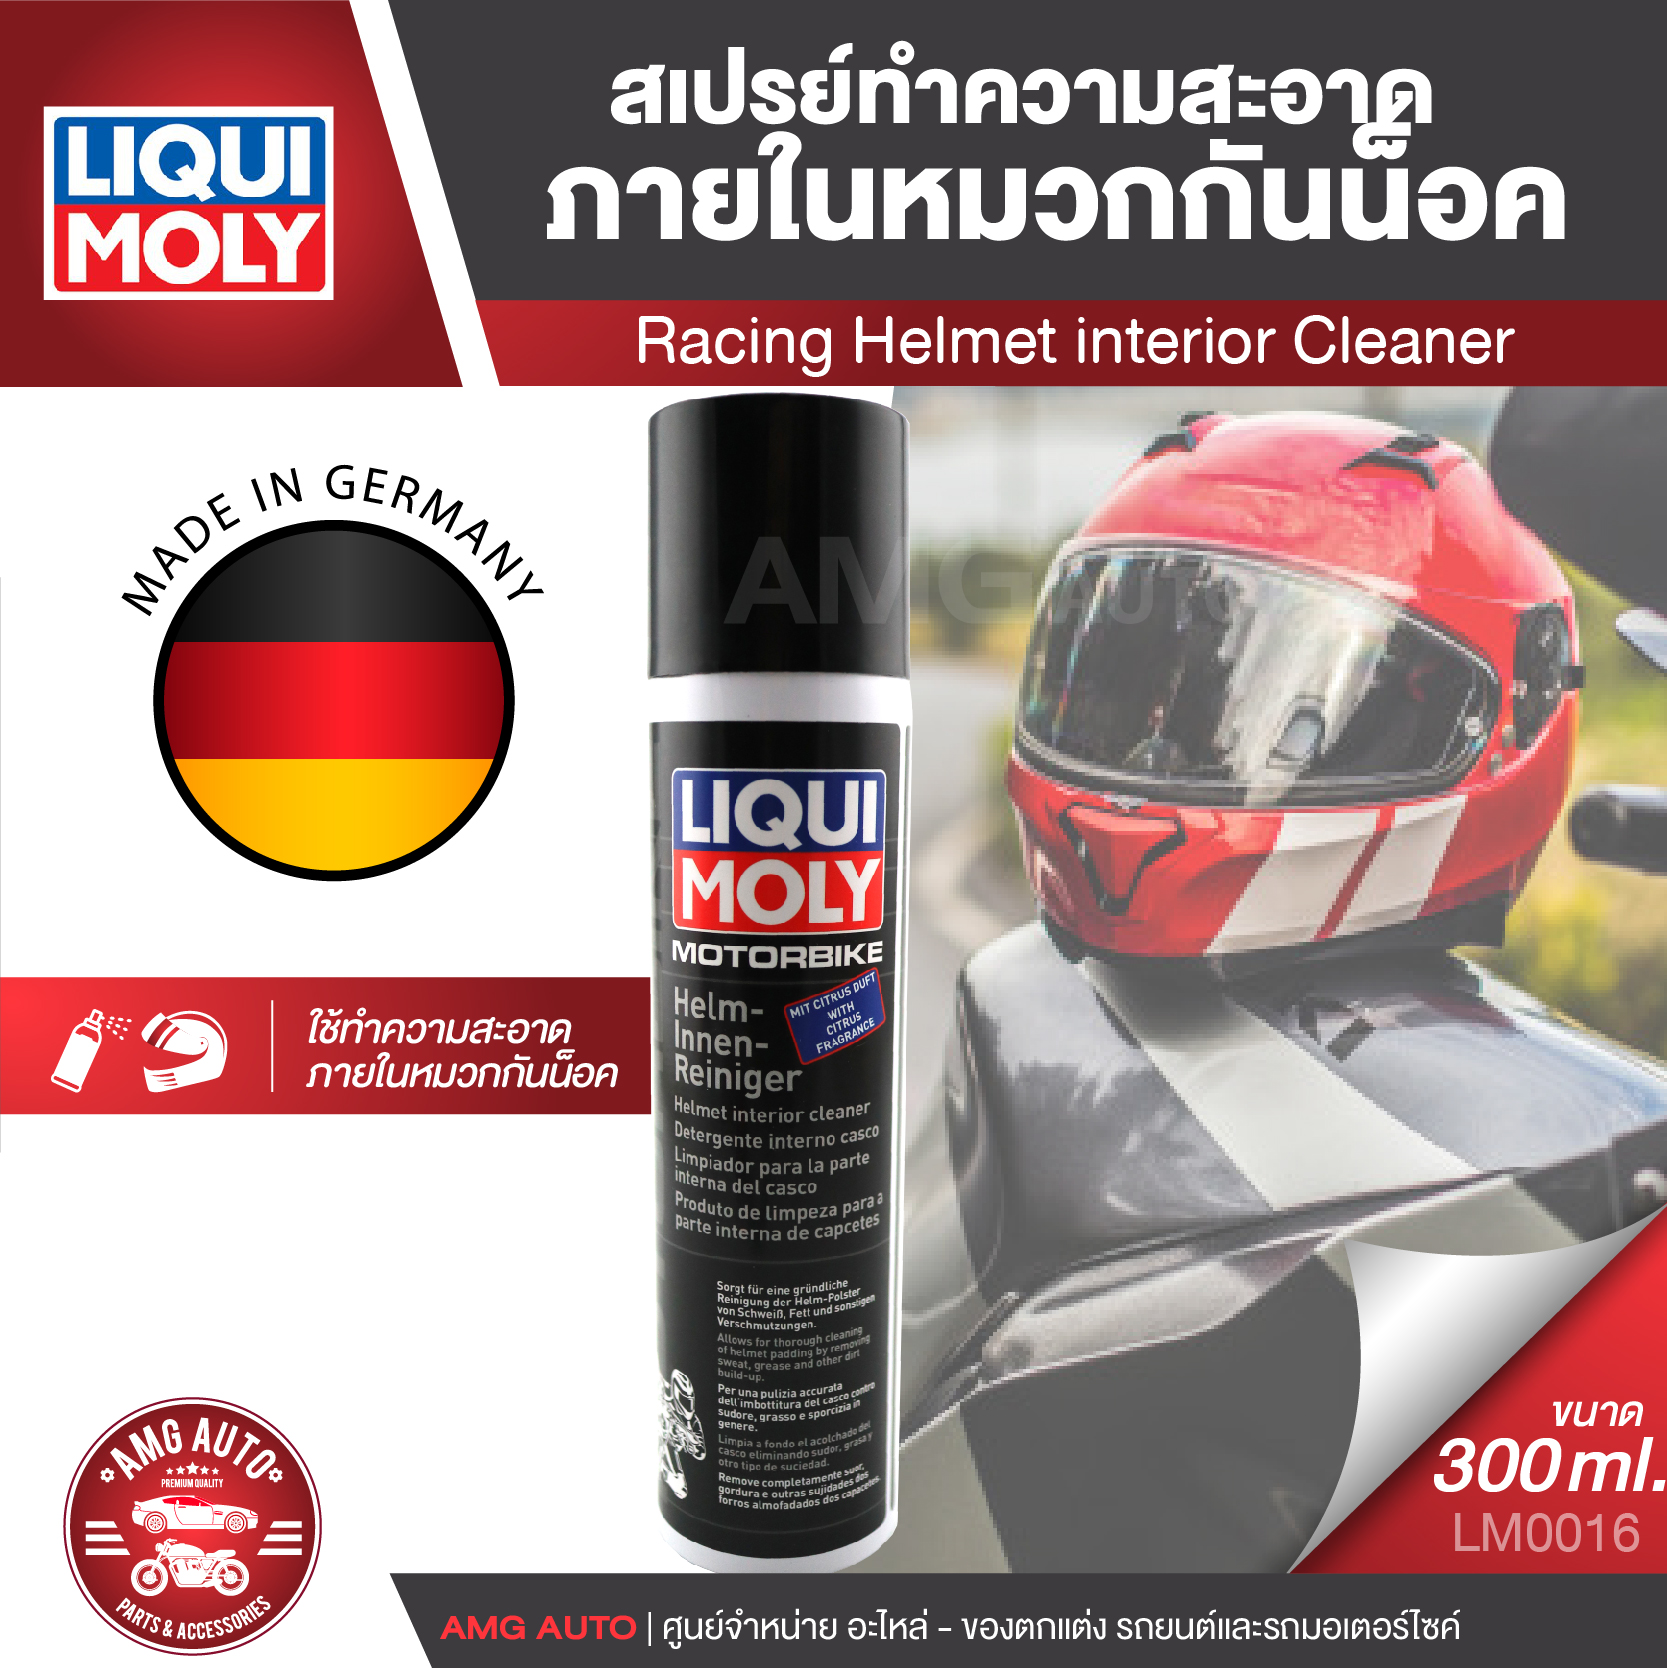 Liqui Moly Racing Helmet interior Cleaner สเปรย์ทำความสะอาดภายในหมวกกันน็อค หมวกกันน็อค ยี่ห้อ ลิควิโมลี่ LM0016